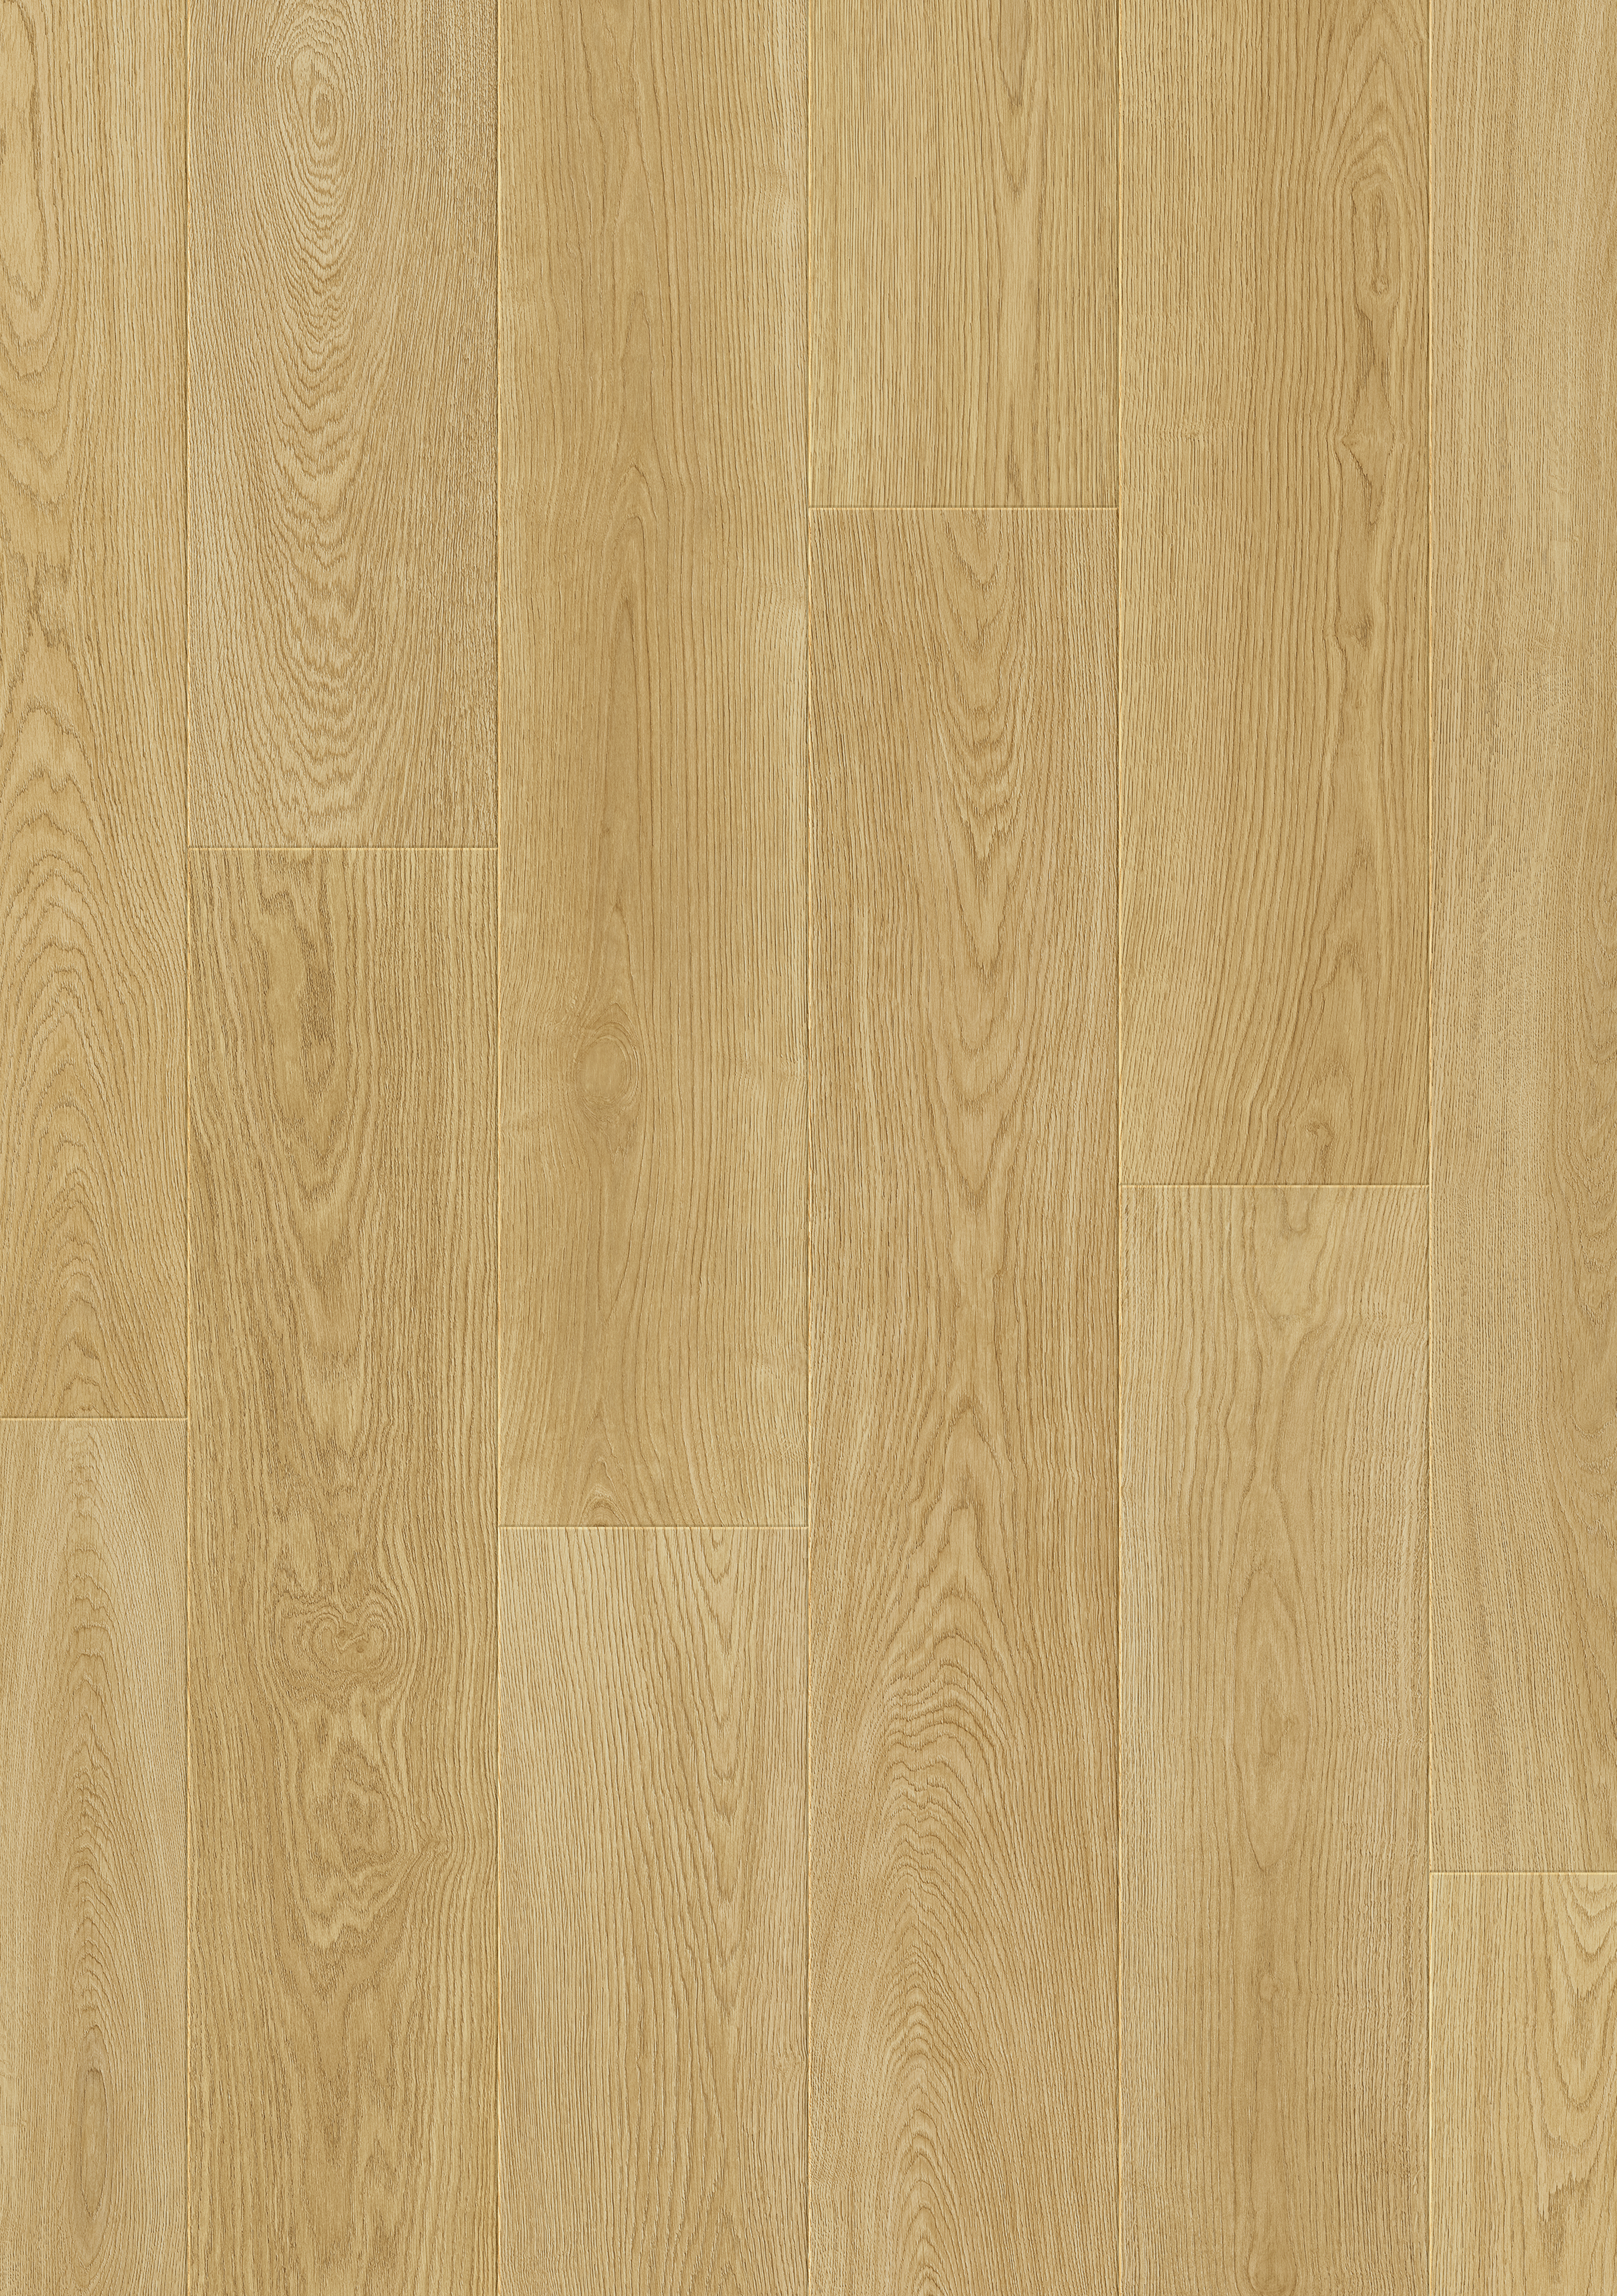 Quick-Step Salto Pure Natural Oak 8mm Laminate Flooring - Sample